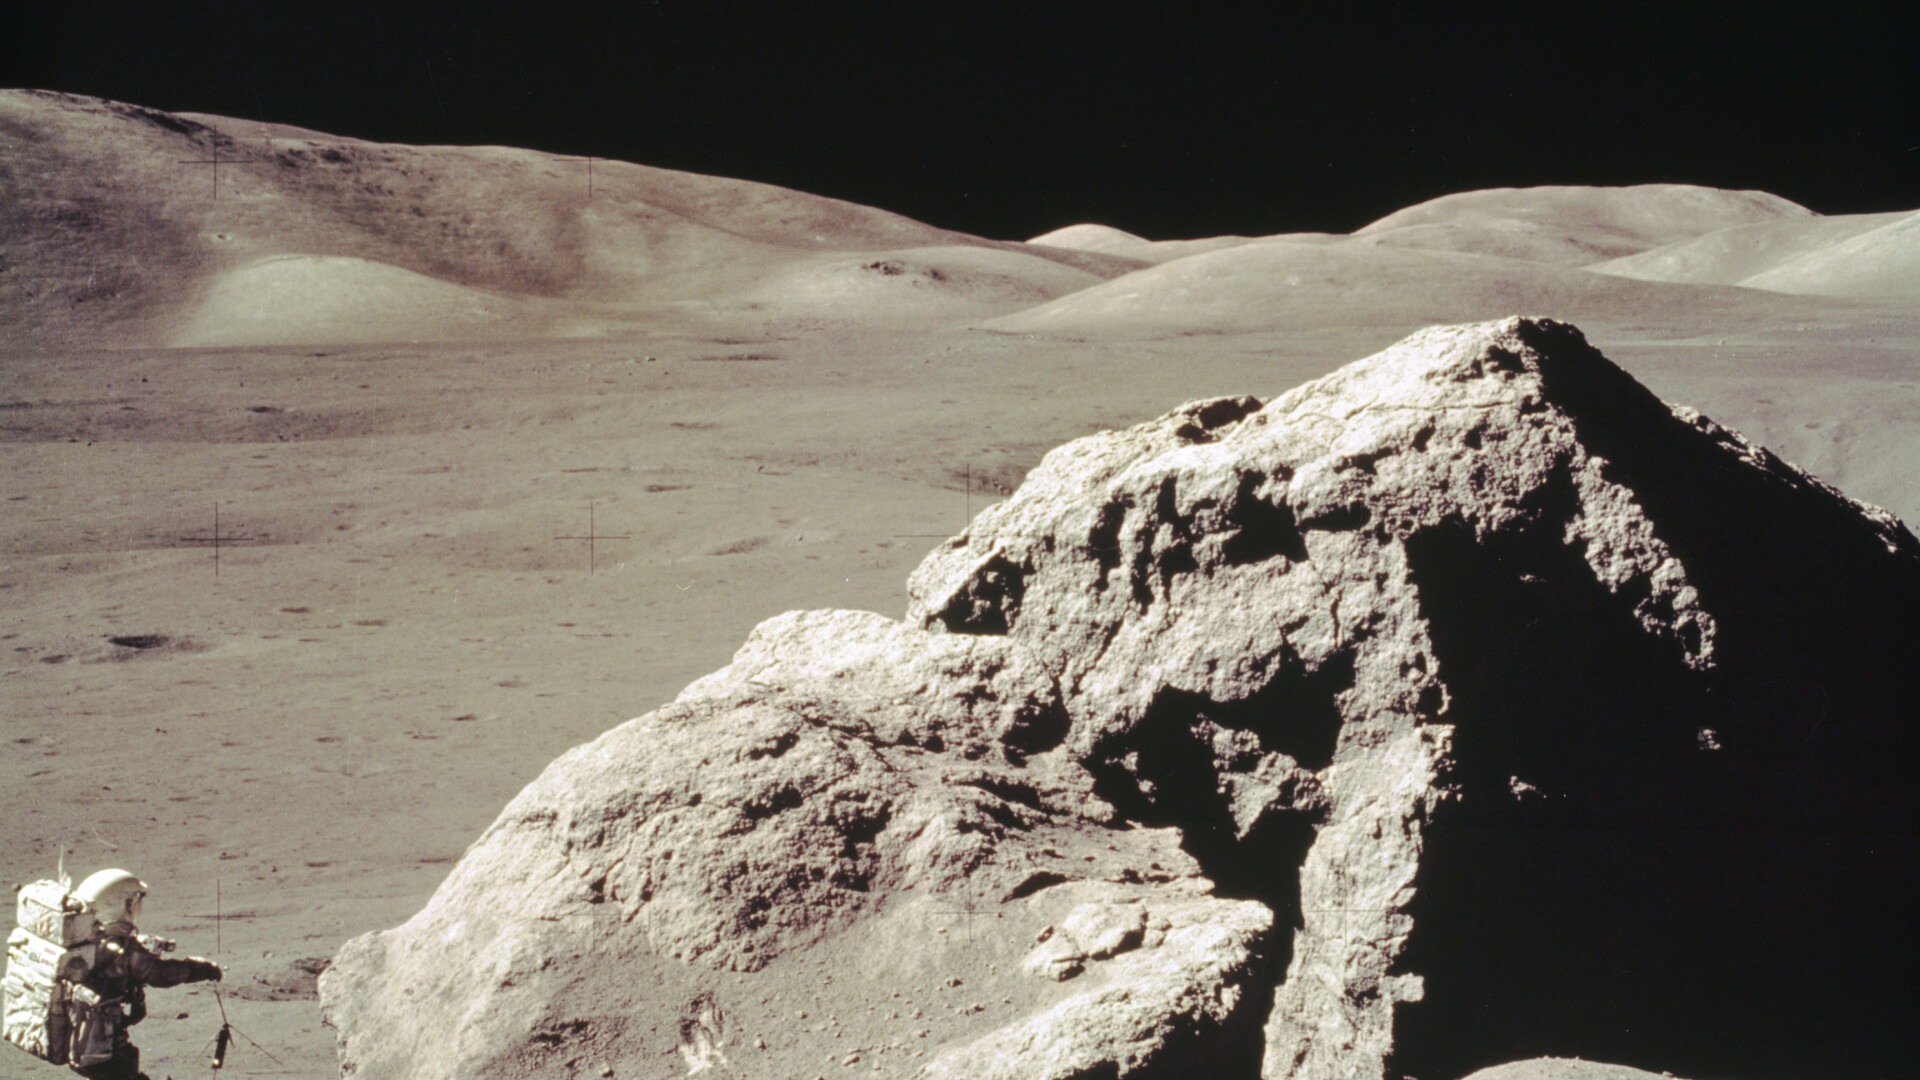 Imagini din cursul misiunilor americane Apollo pe Luna - 10